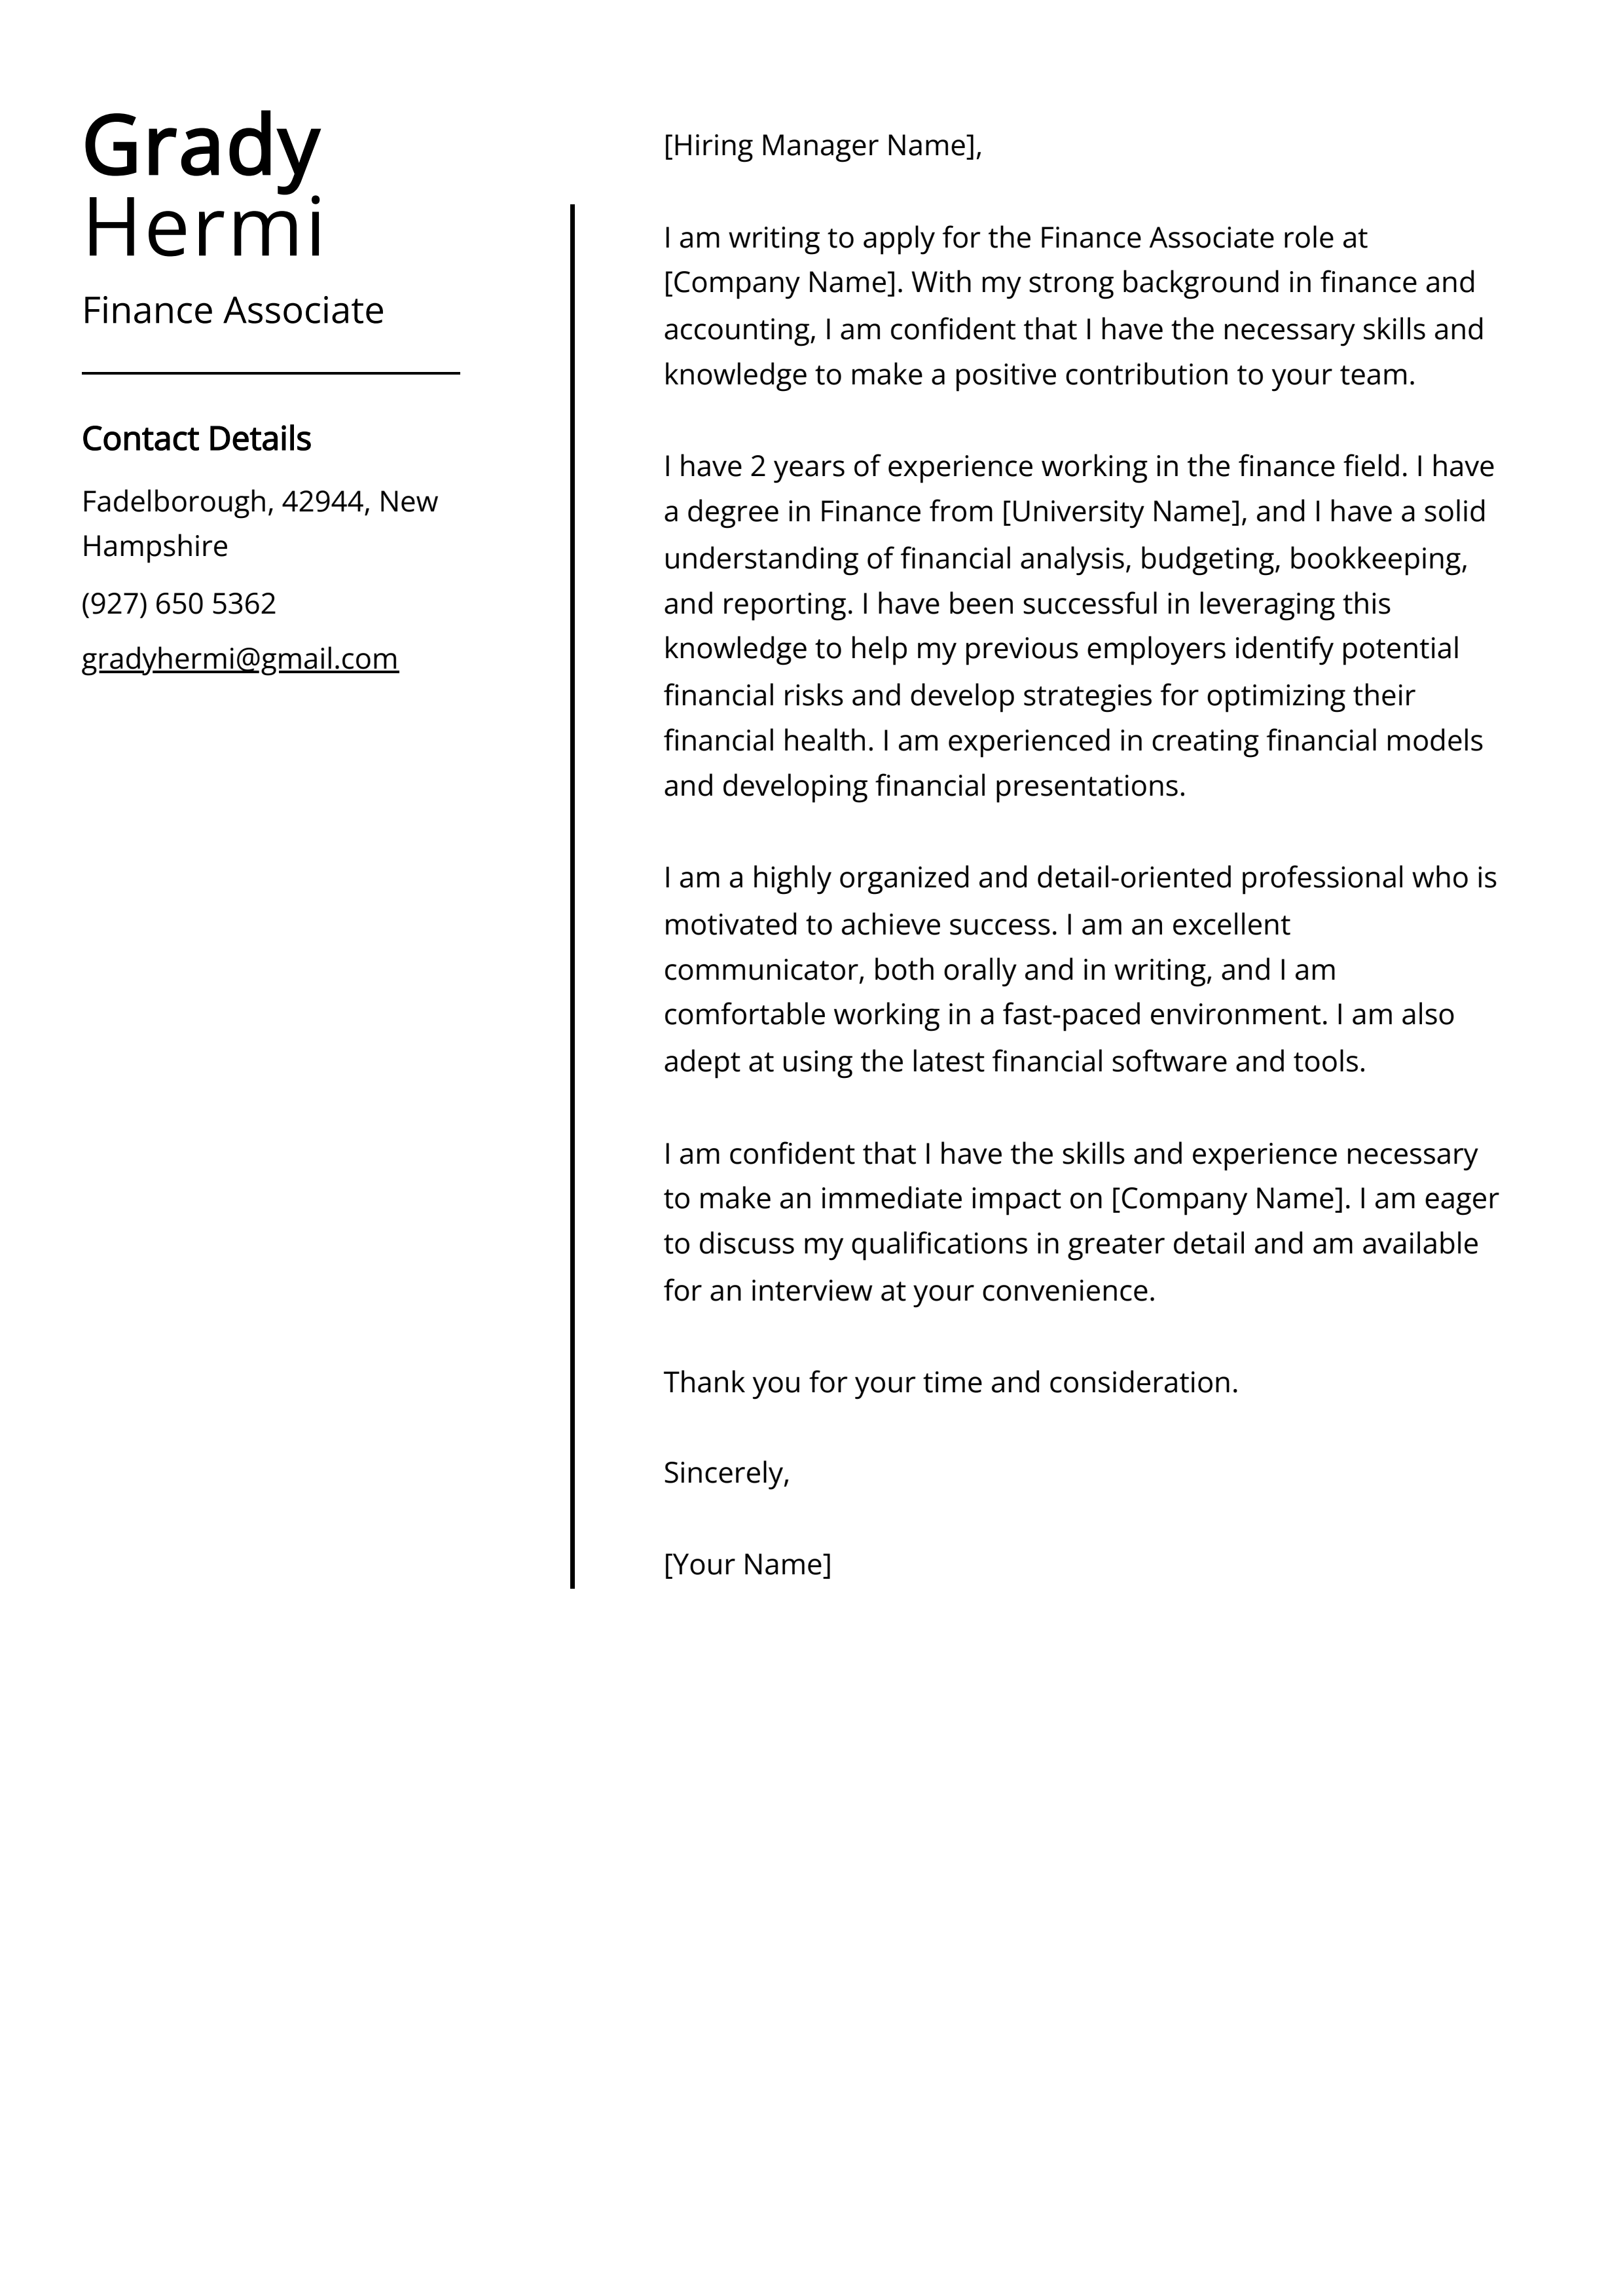 Finance Associate Cover Letter Example